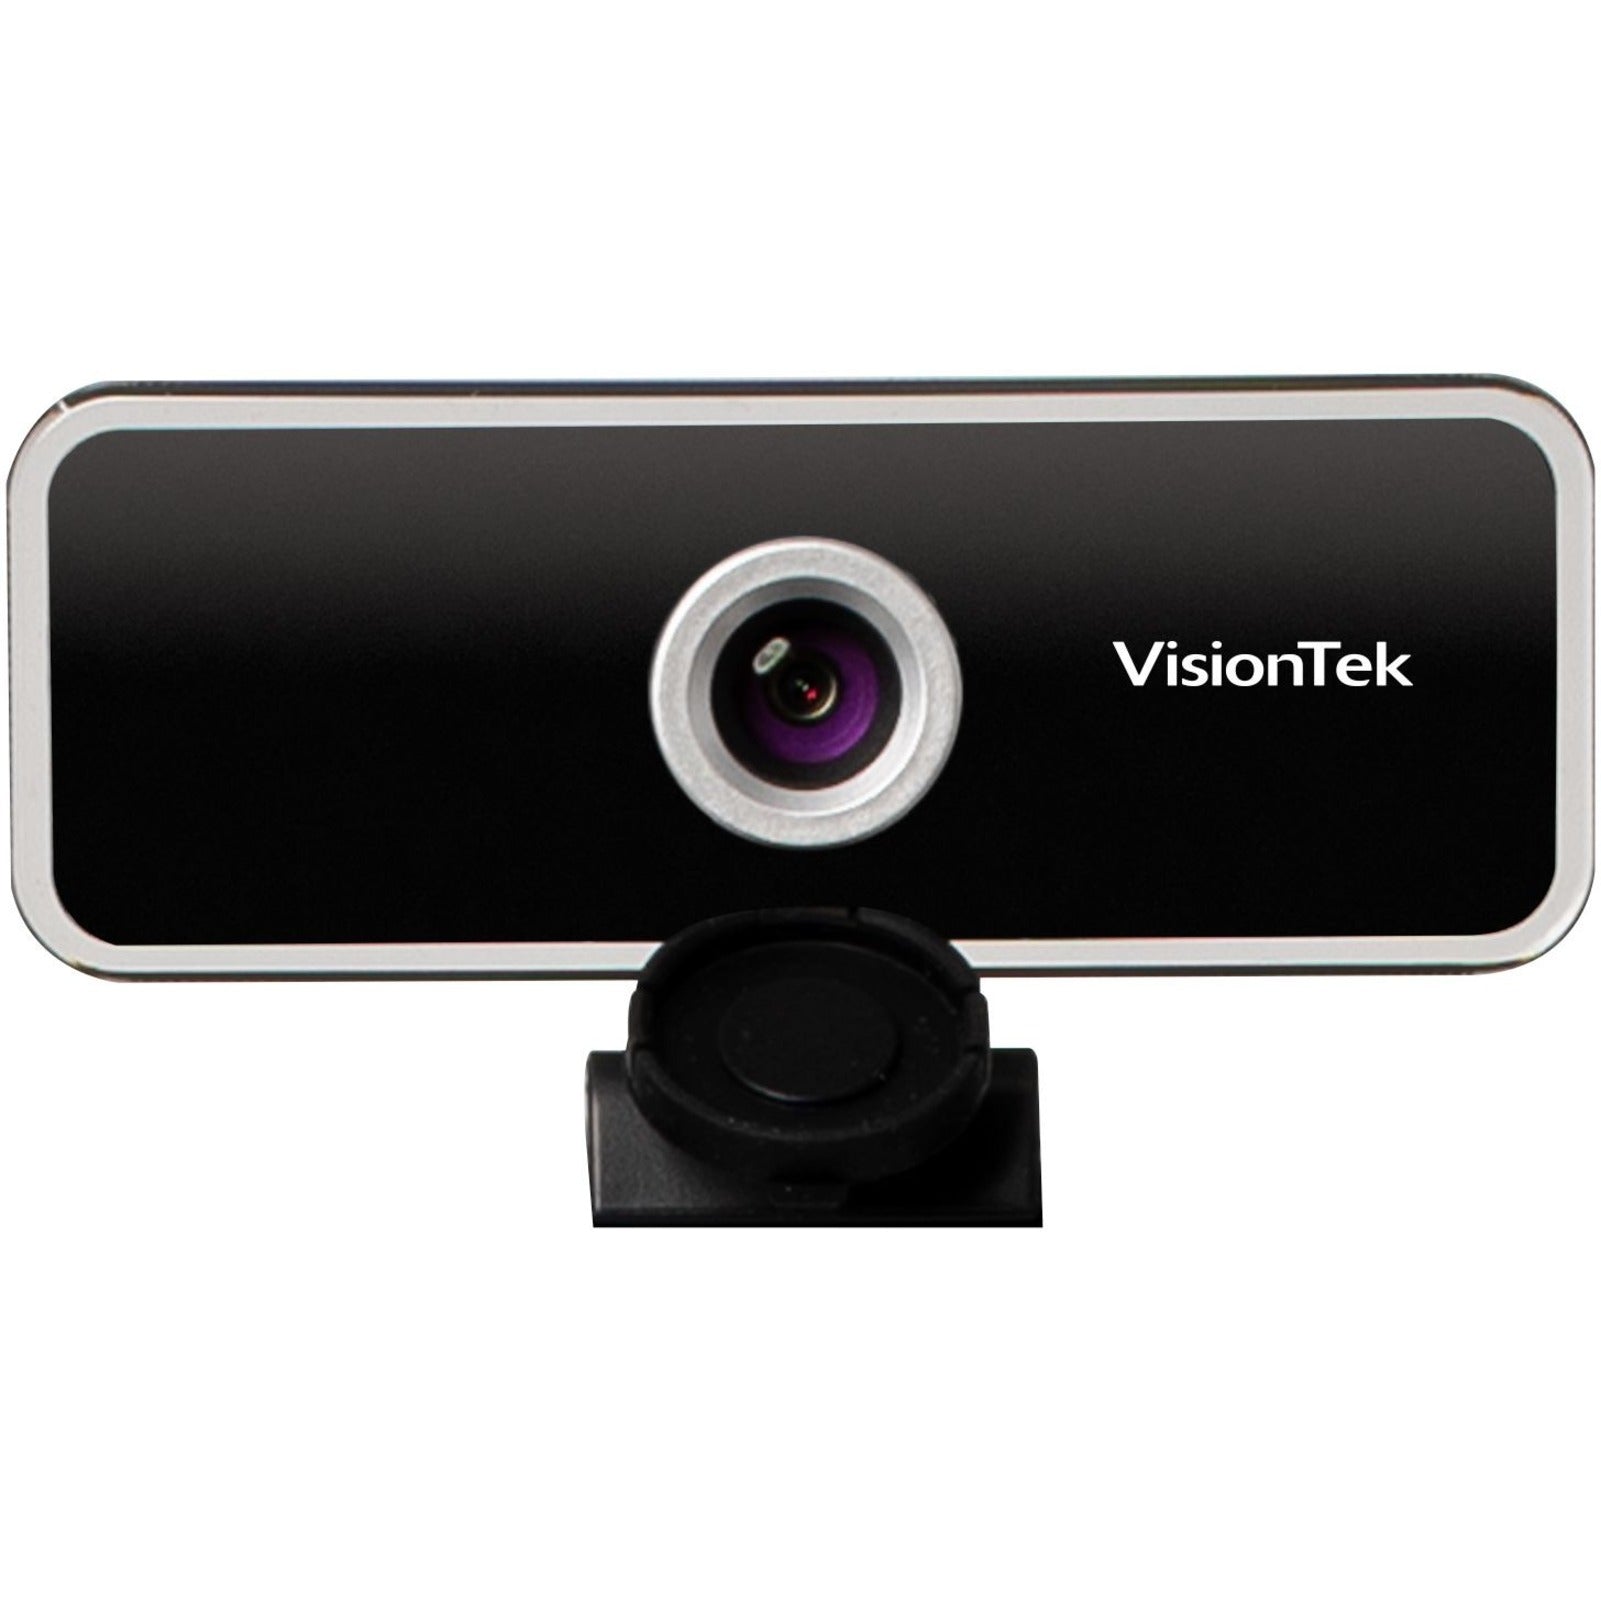 VisionTek 901380 VTWC20 Full HD 1080p Webcam, USB 2.0, Built-in Microphone